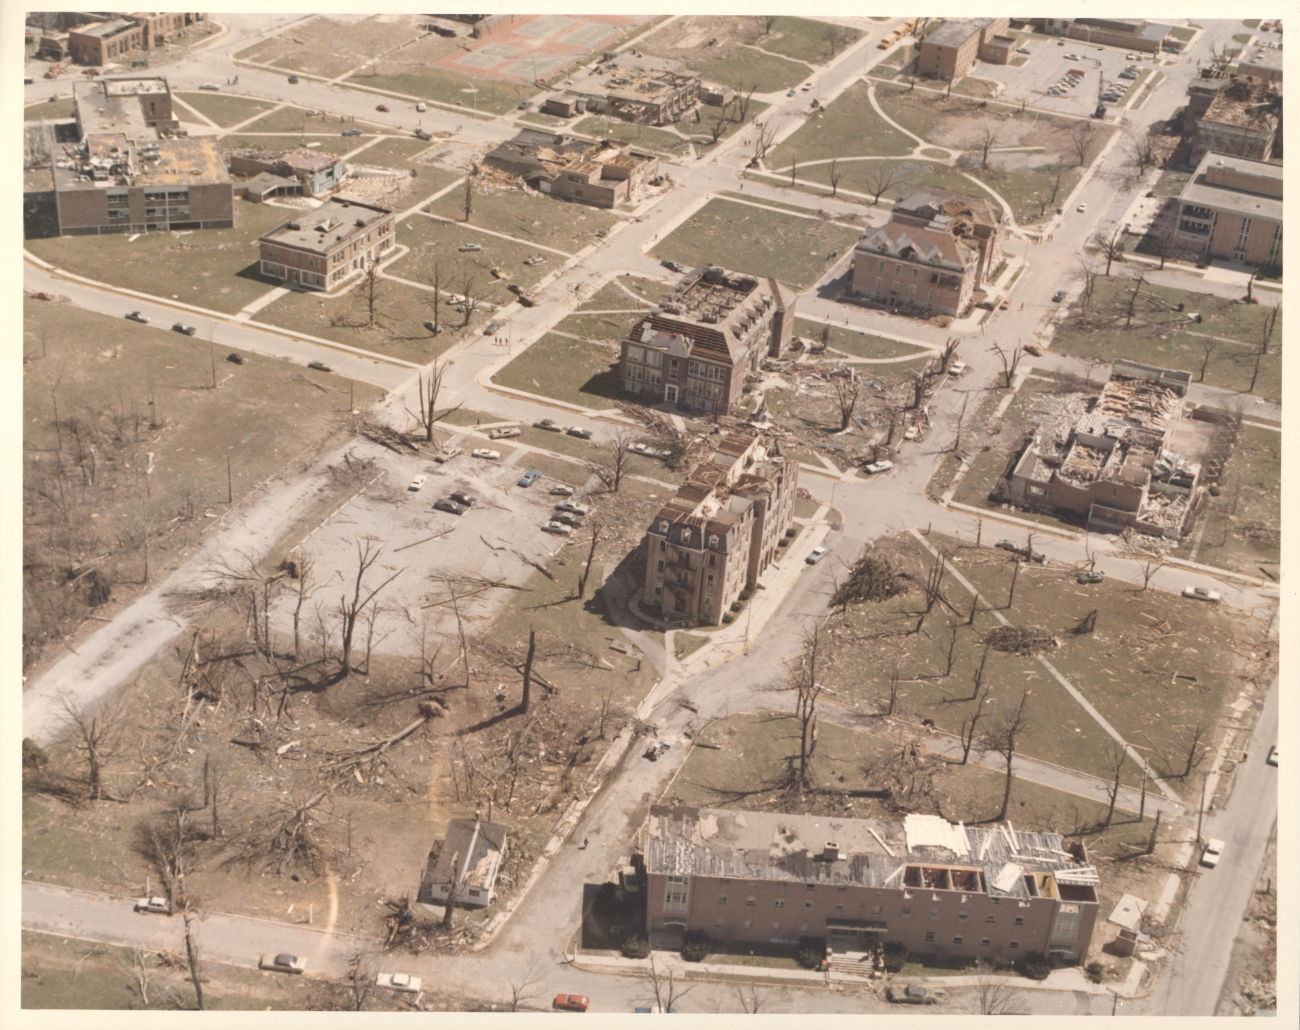 Central State University tornado damage from Super Tornado Outbreak of April 3, 1974